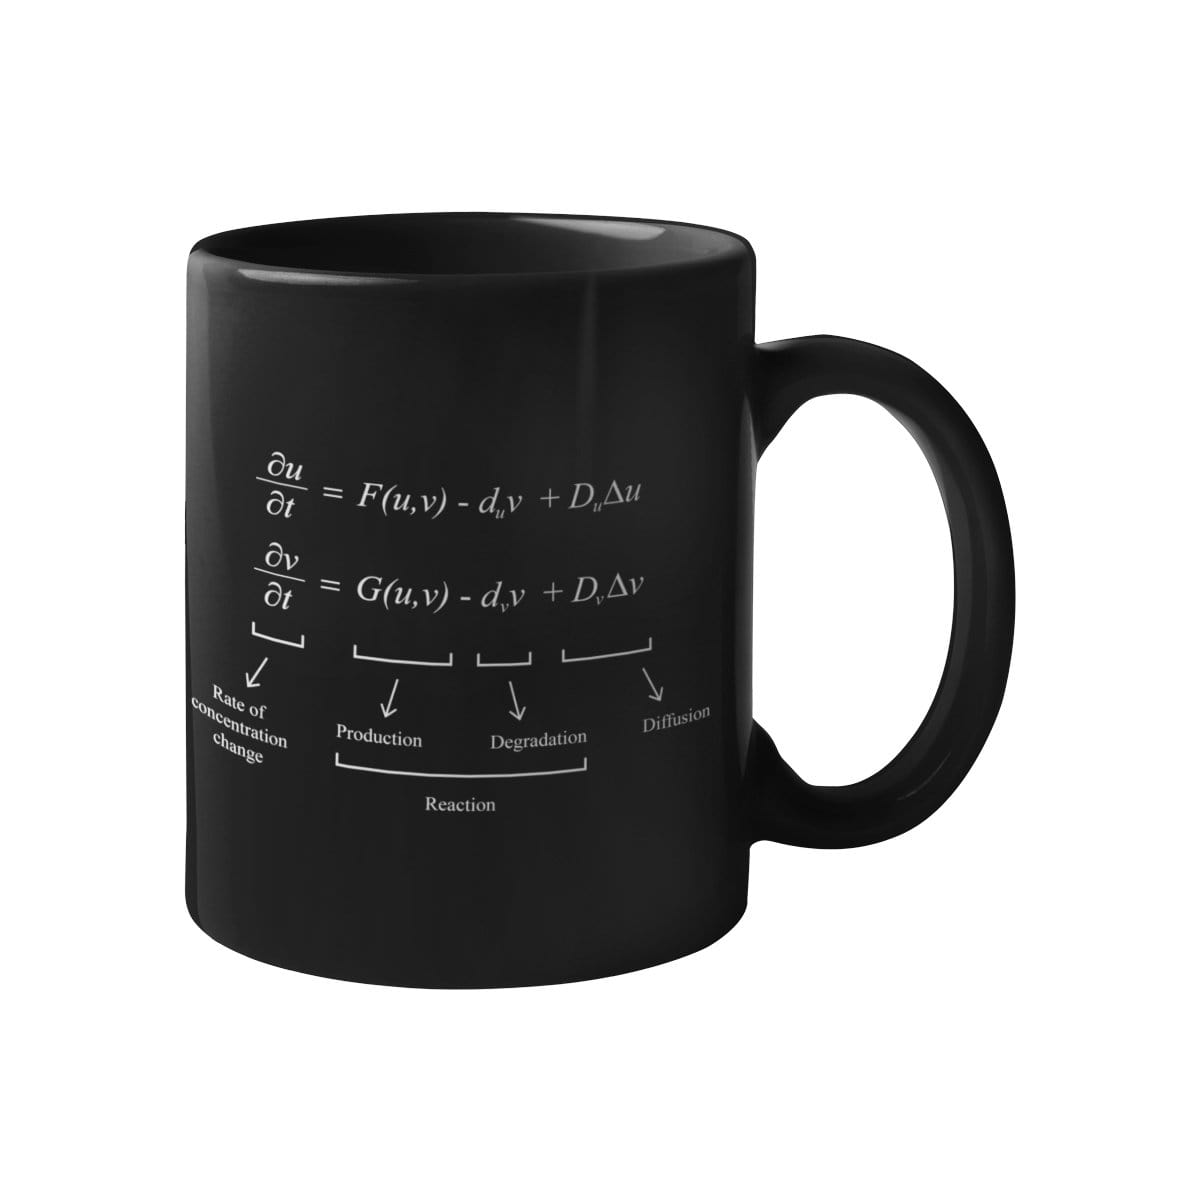 Alan Turing Equation Mug - Black